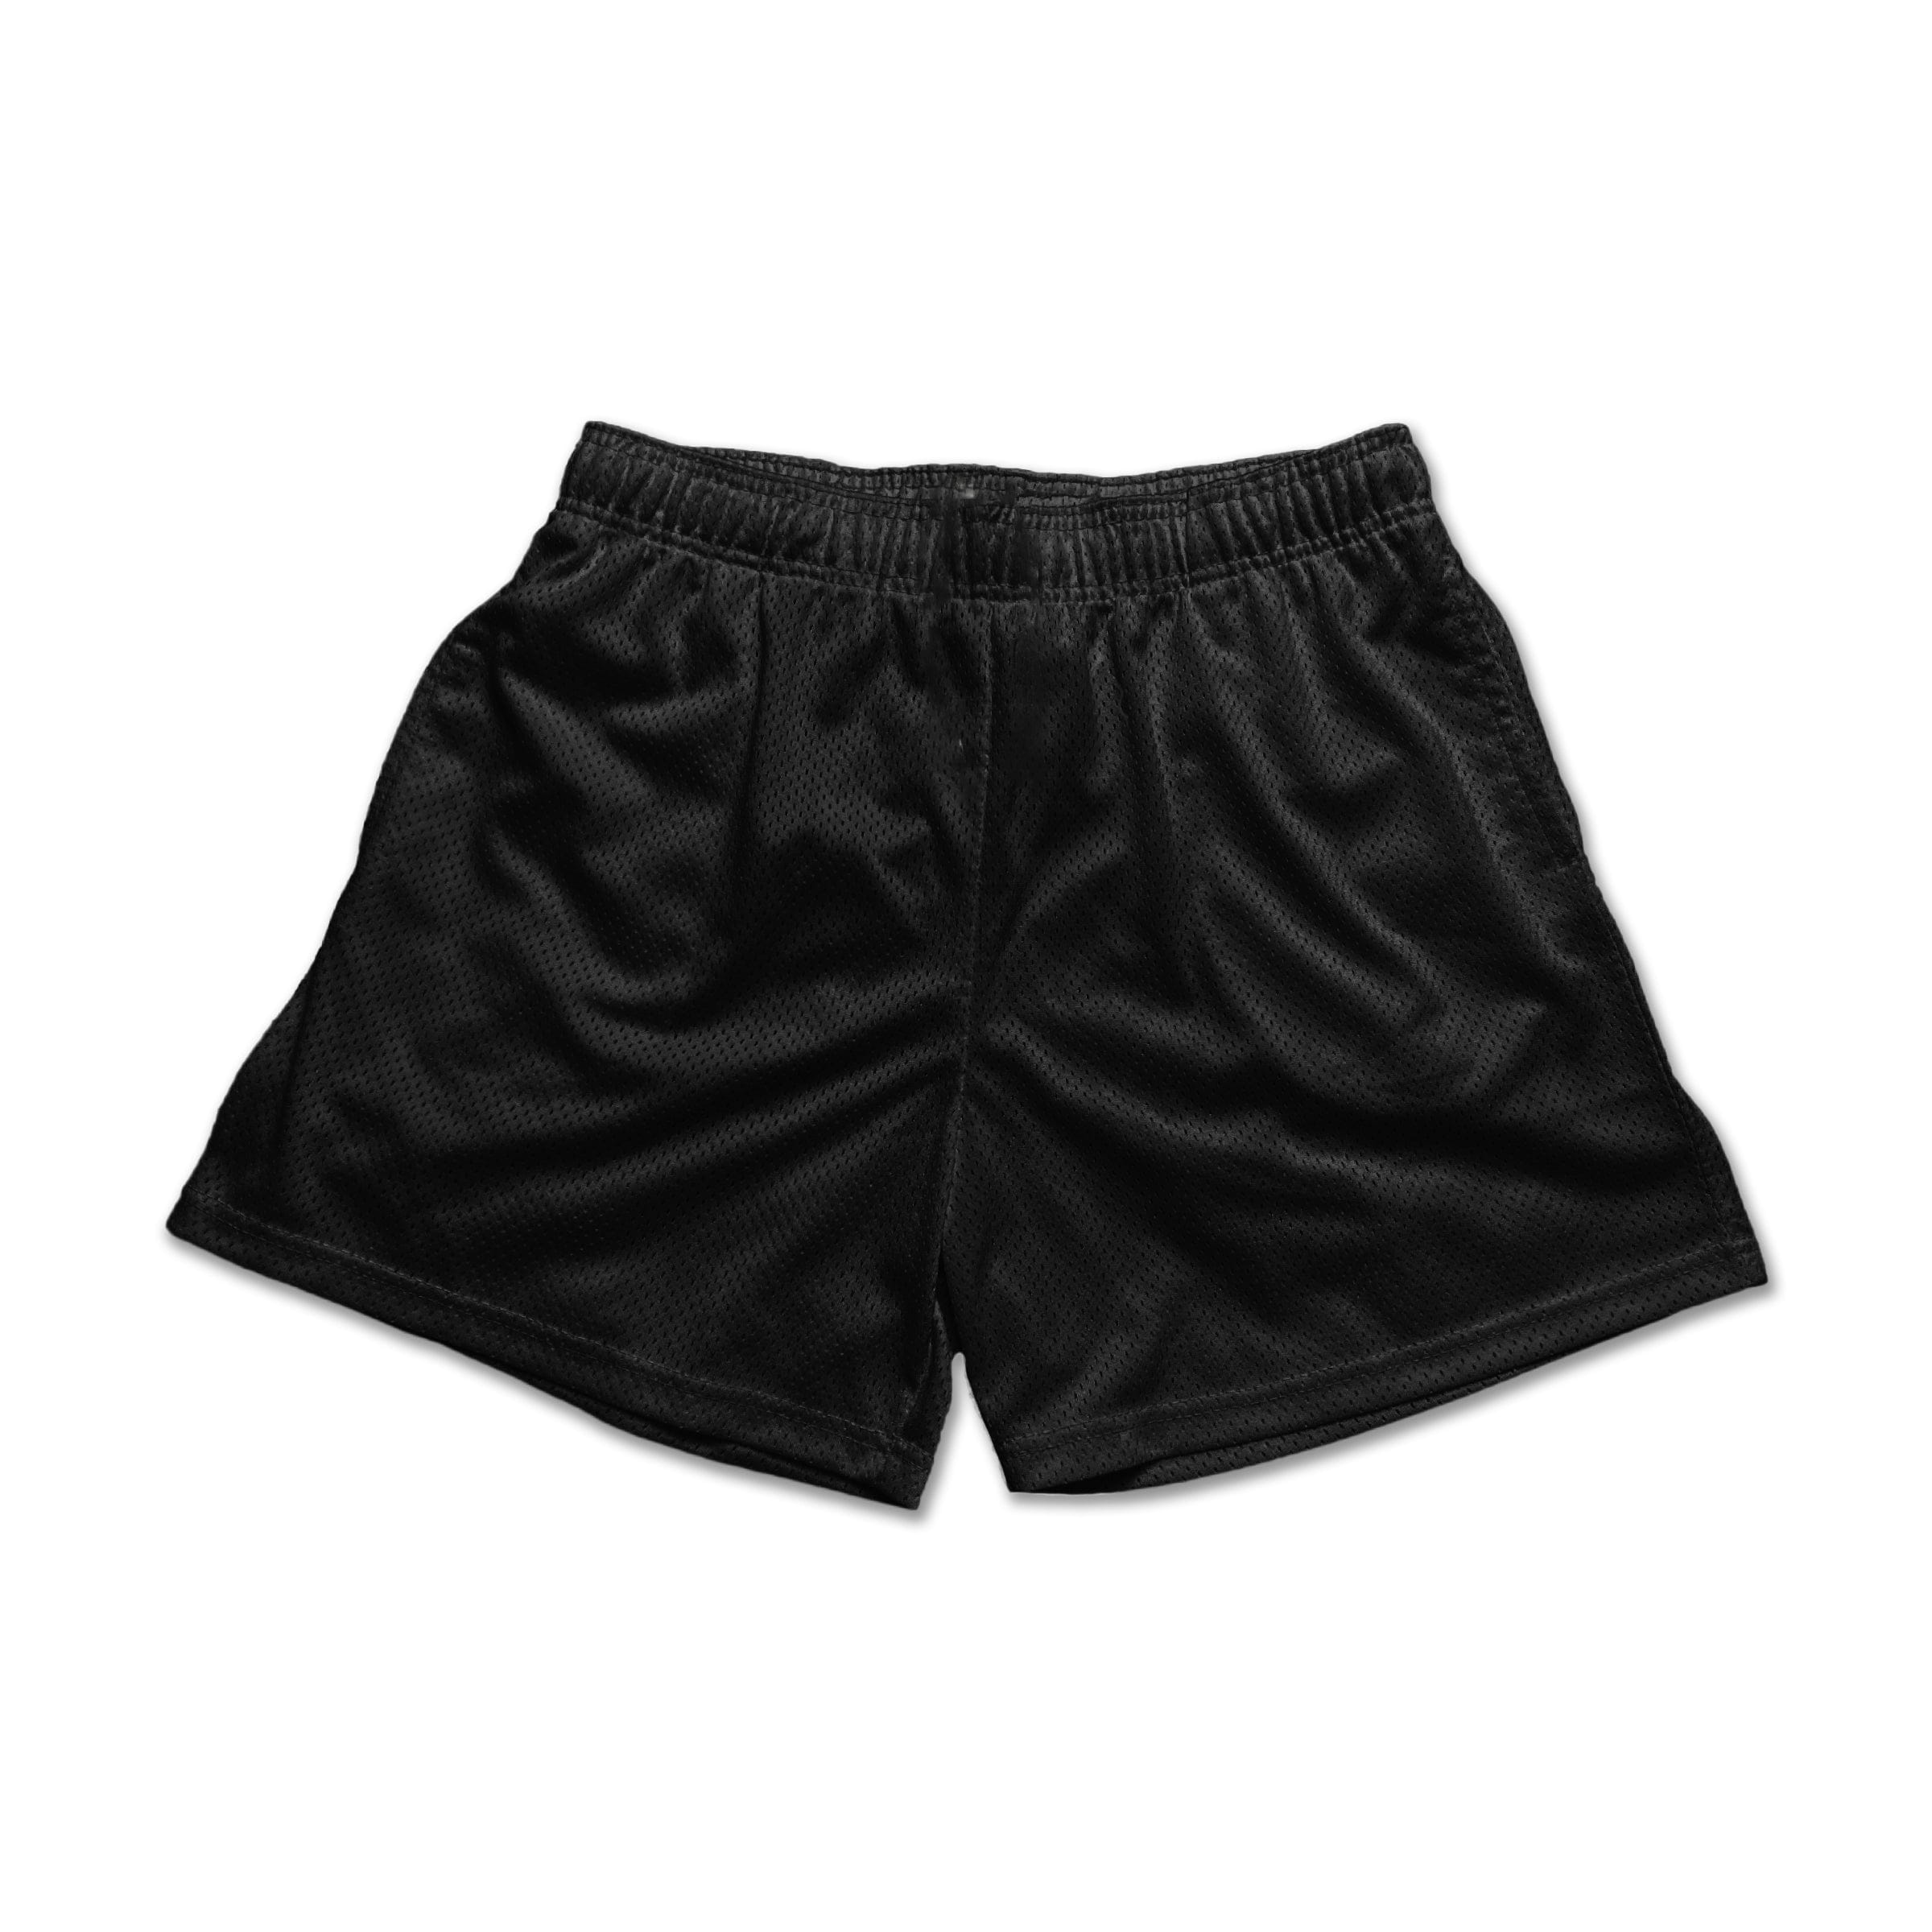 Underdogs Shorts - Black